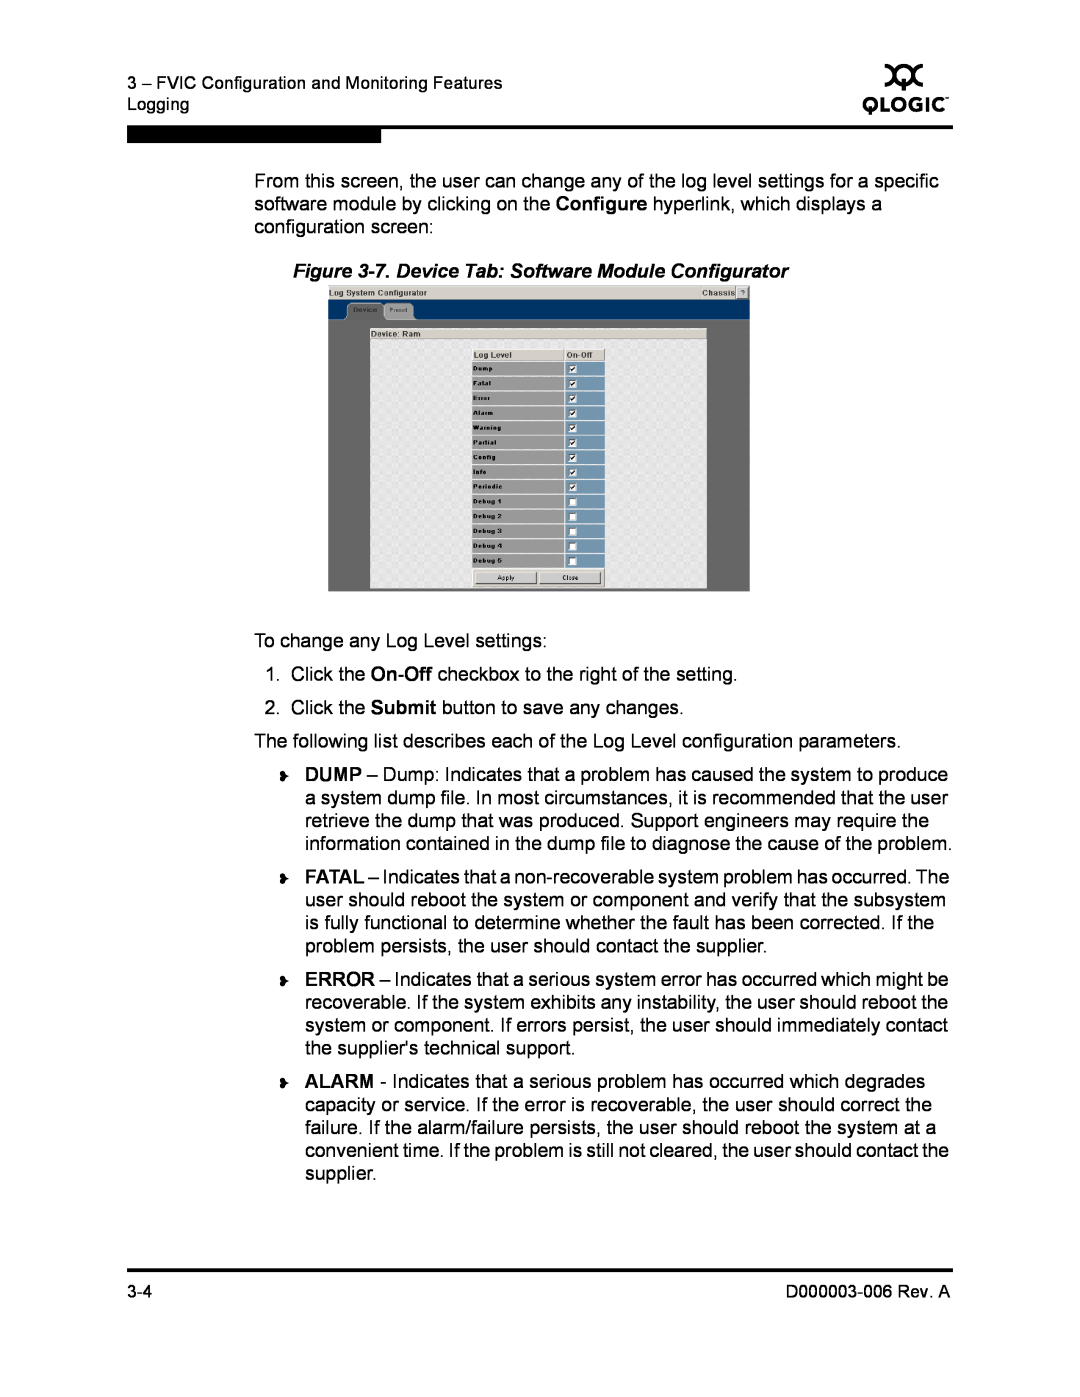 Q-Logic 9000 manual 7. Device Tab Software Module Configurator 